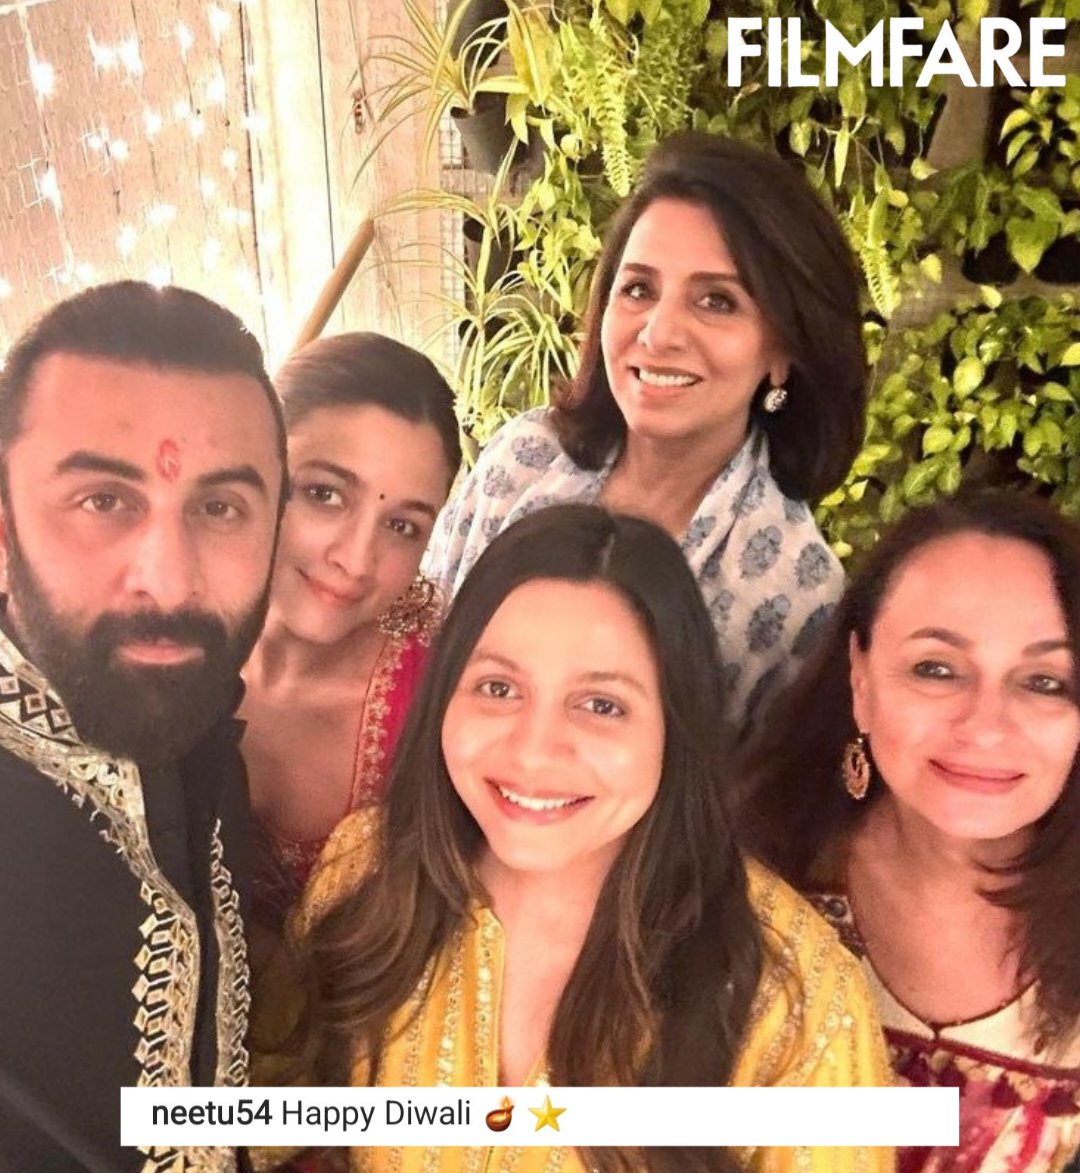 And finally the picture we were waiting for! ❤️

#AliaBhatt, #RanbirKapoor, #NeetuKapoor, #SoniRazdan and #ShaheenBhatt pose for a Diwali selfie.